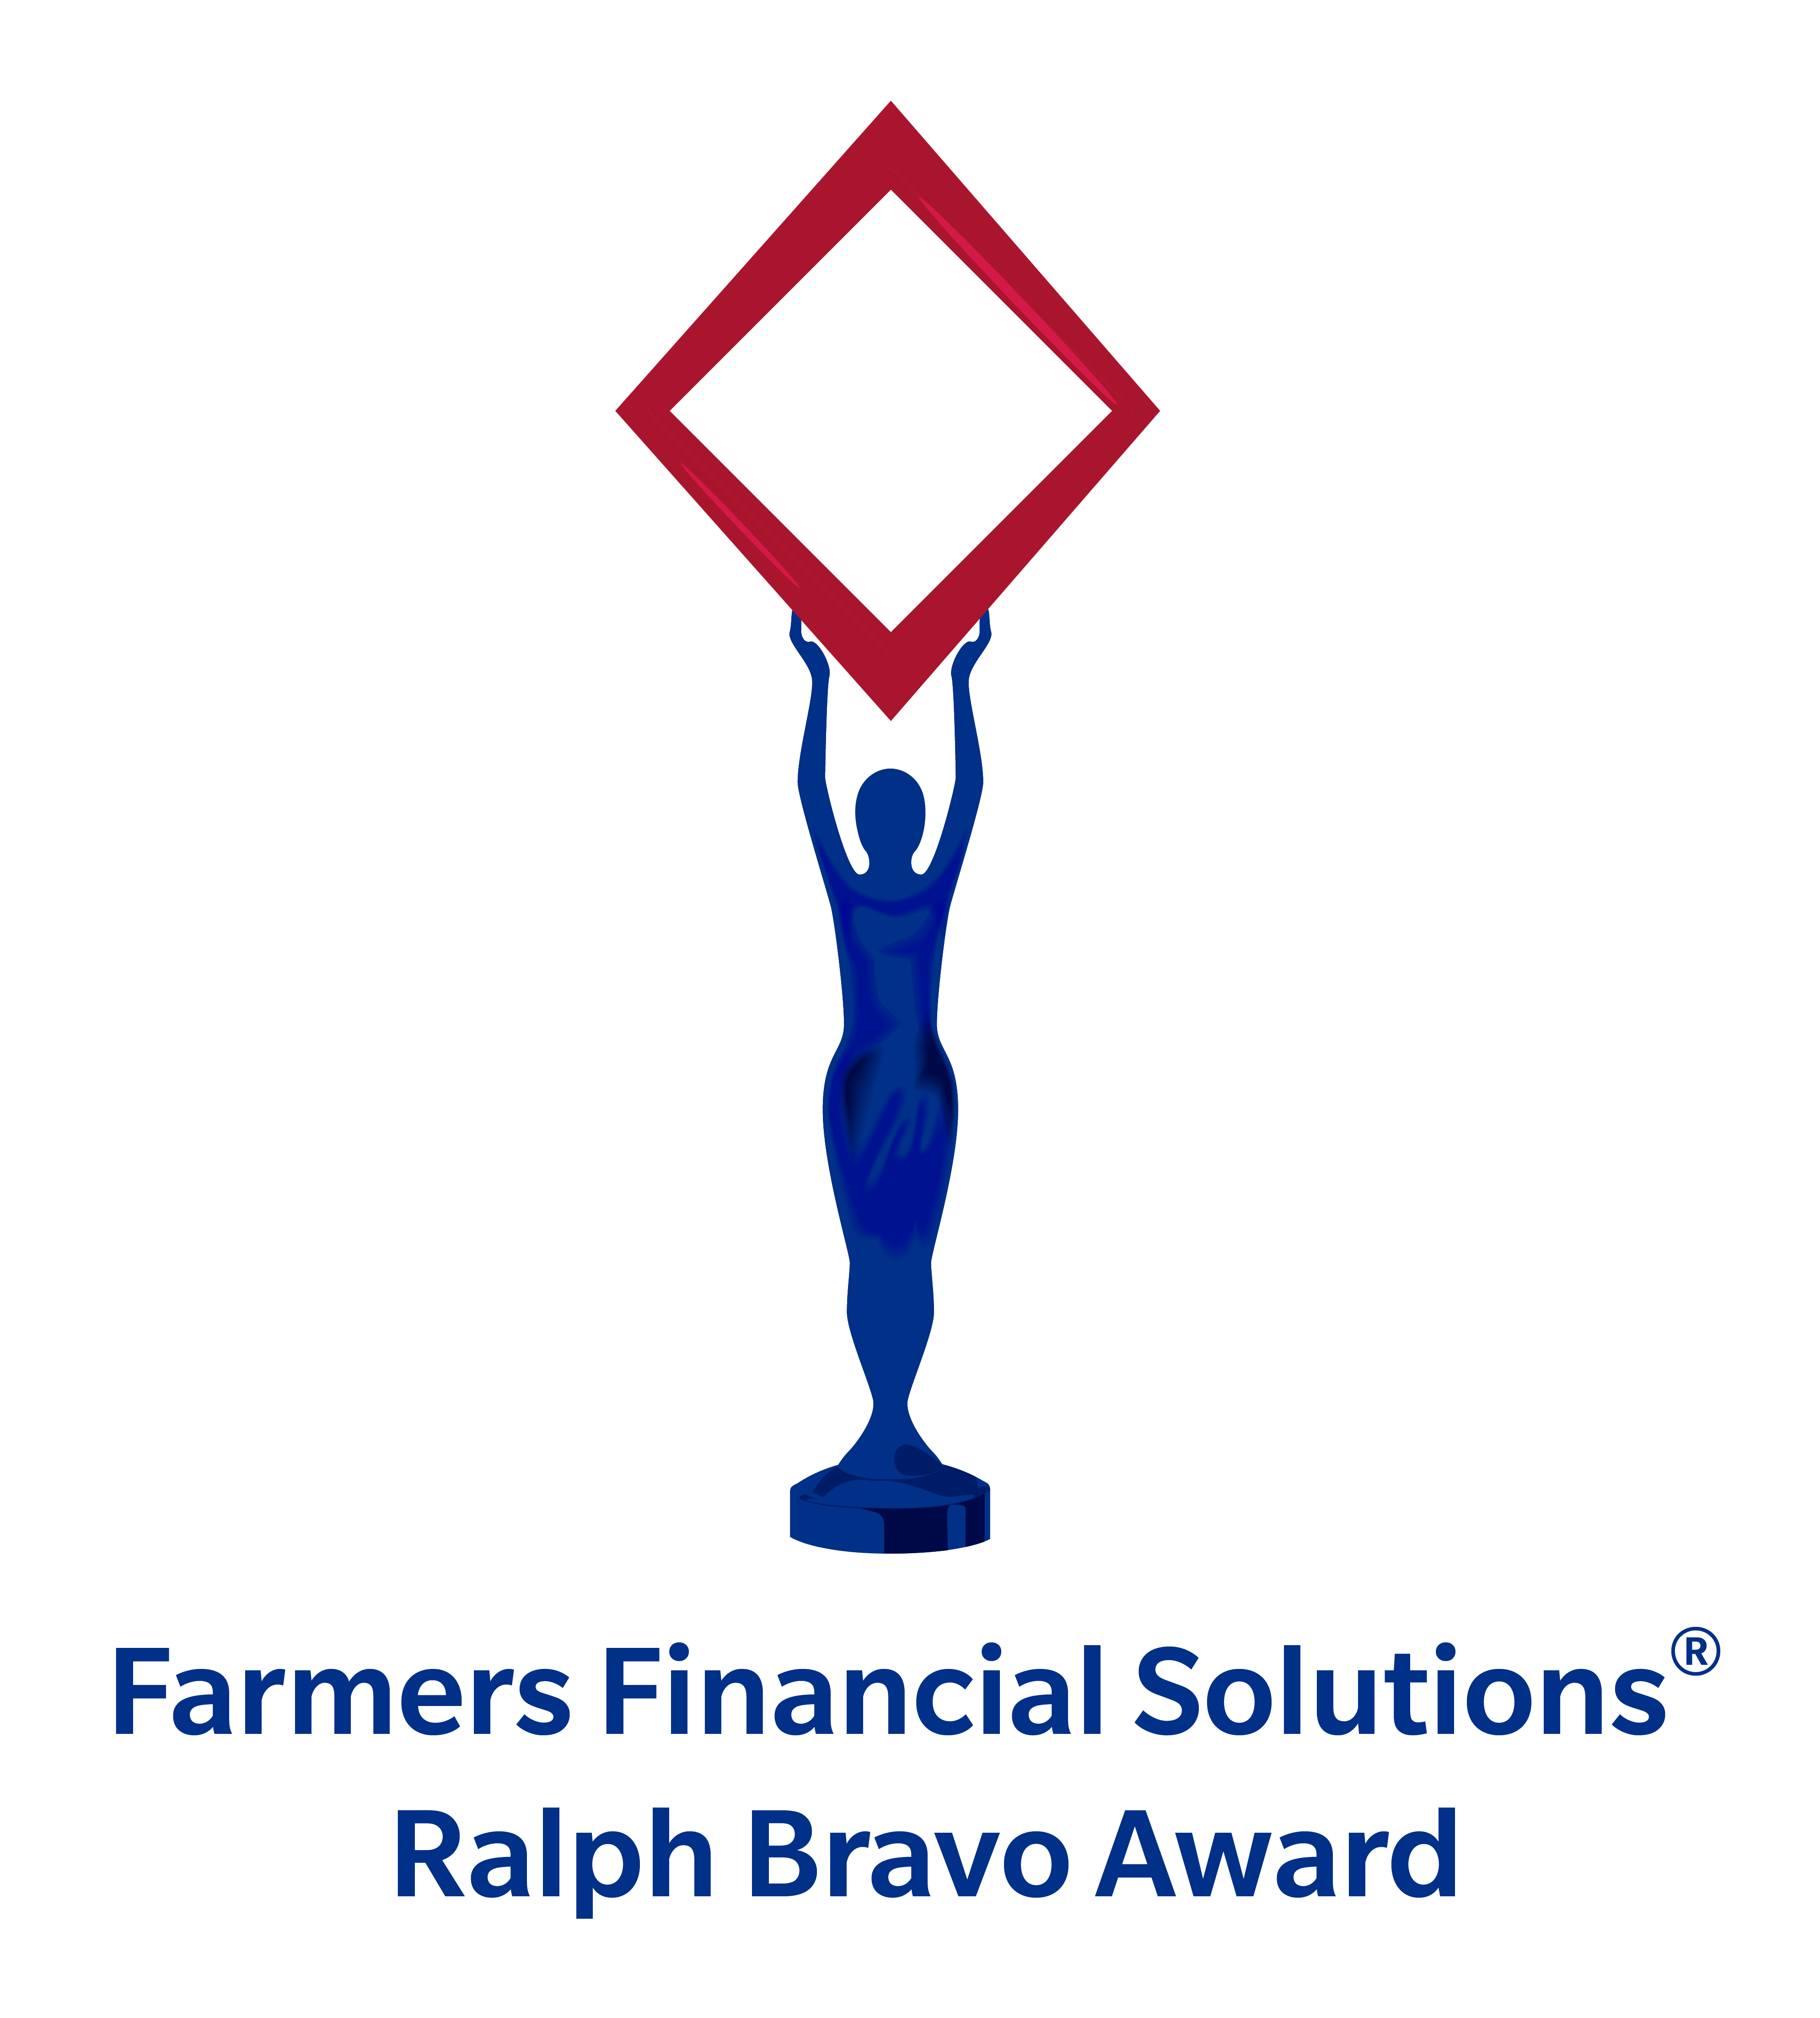 Ralph Bravo Award logo